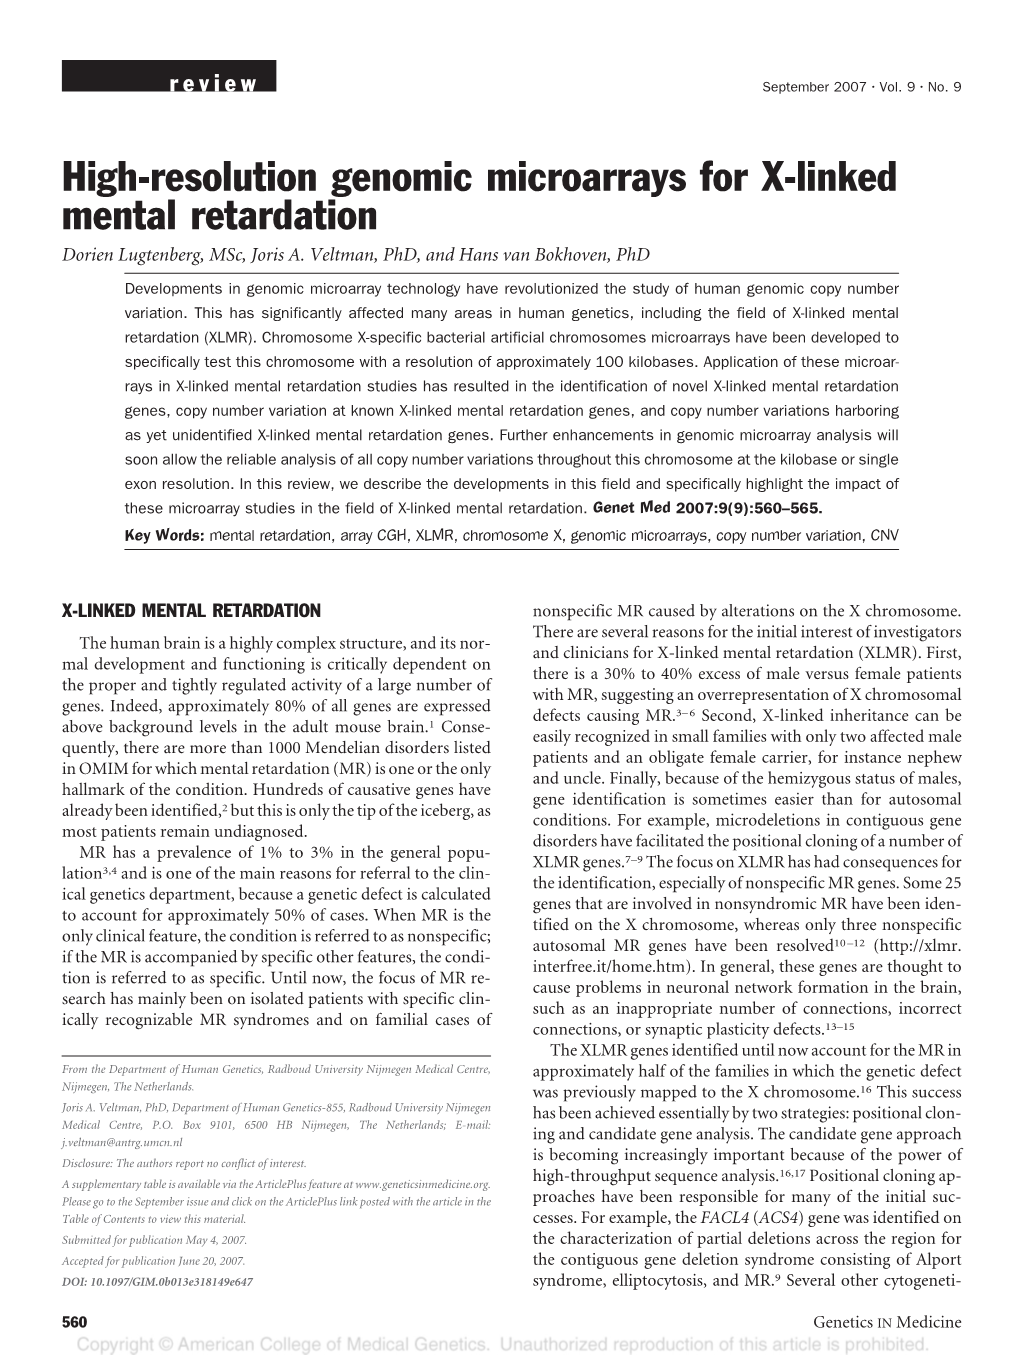 High-Resolution Genomic Microarrays for X-Linked Mental Retardation Dorien Lugtenberg, Msc, Joris A